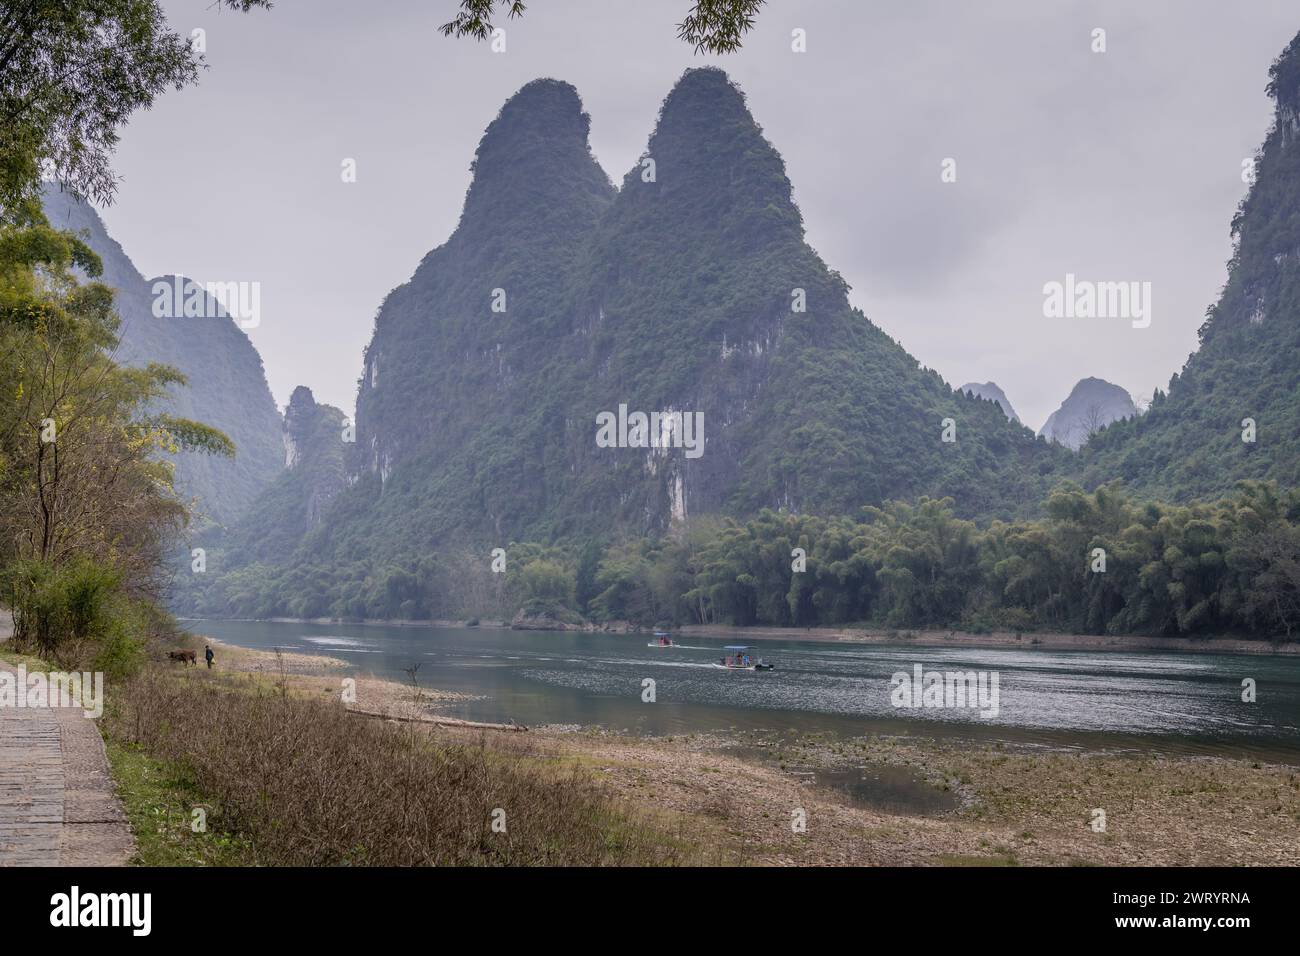 Wunderschöne Yu Long River Karst Berglandschaft in Yangshuo Guilin, China. Kopierbereich für Text Stockfoto